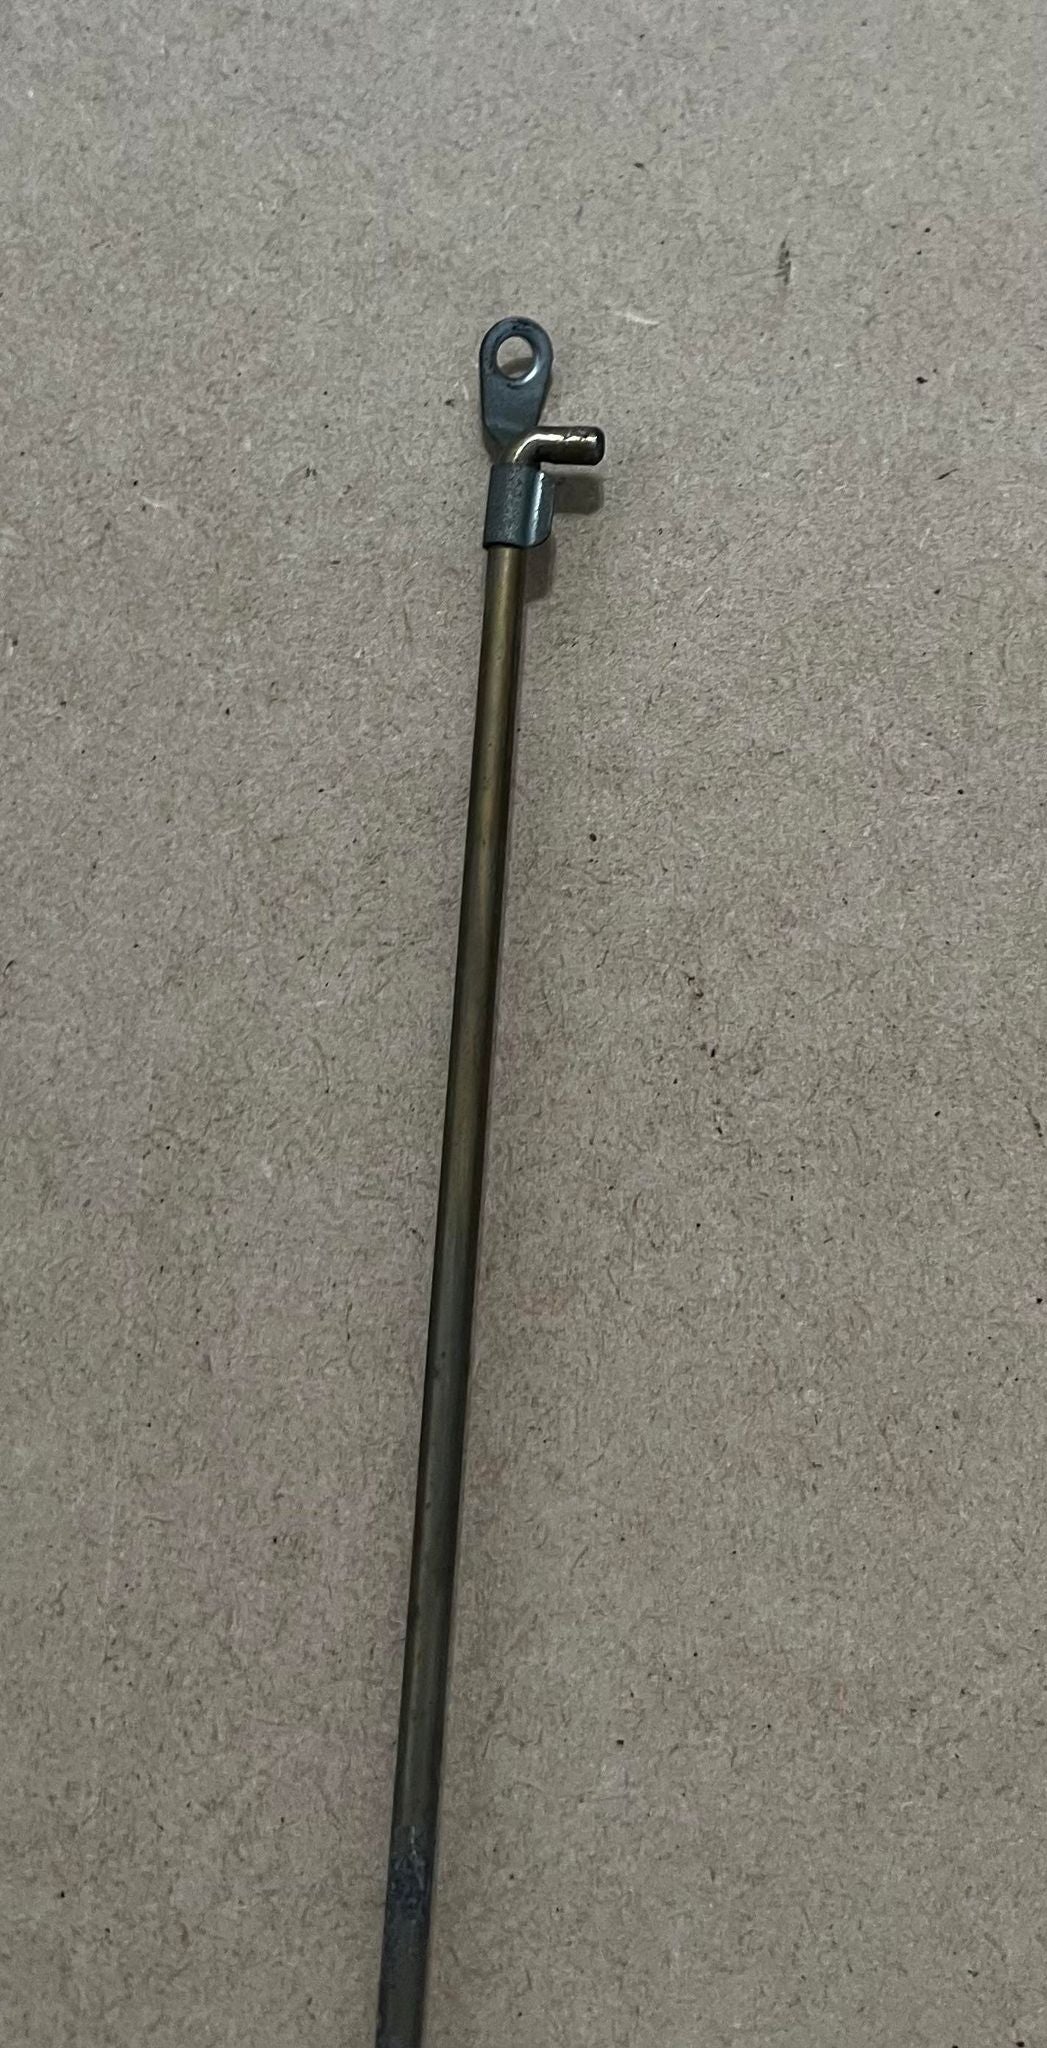 Used Mercedes-Benz Door Pull Linkage Rod w/ Lock W116 #49